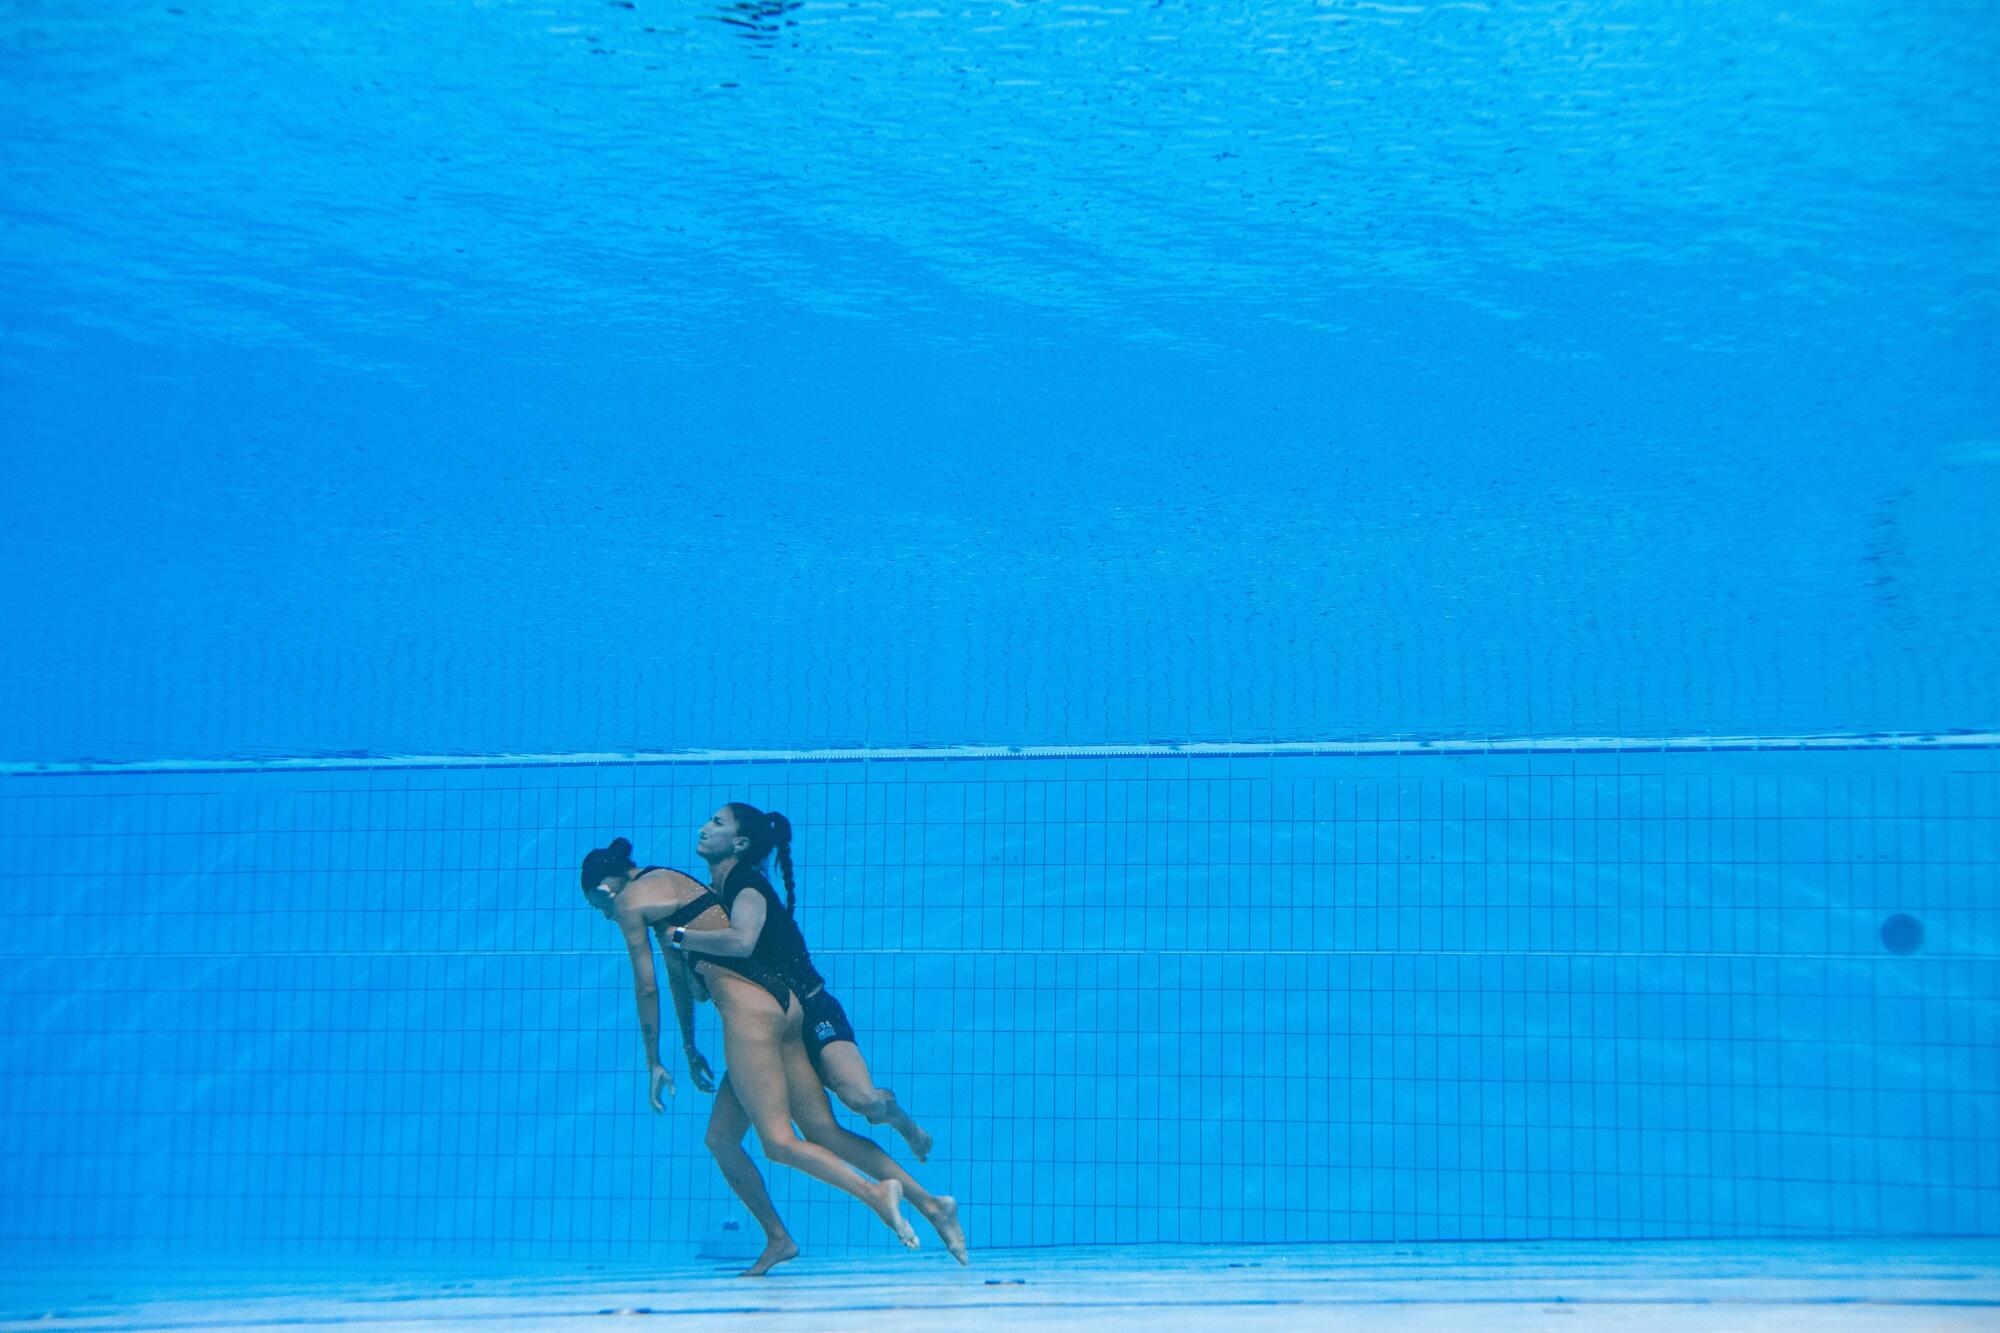 U.S. Artistic Swimming coach Andrea Fuentes rescues Anita Alvarez from the bottom of the pool.